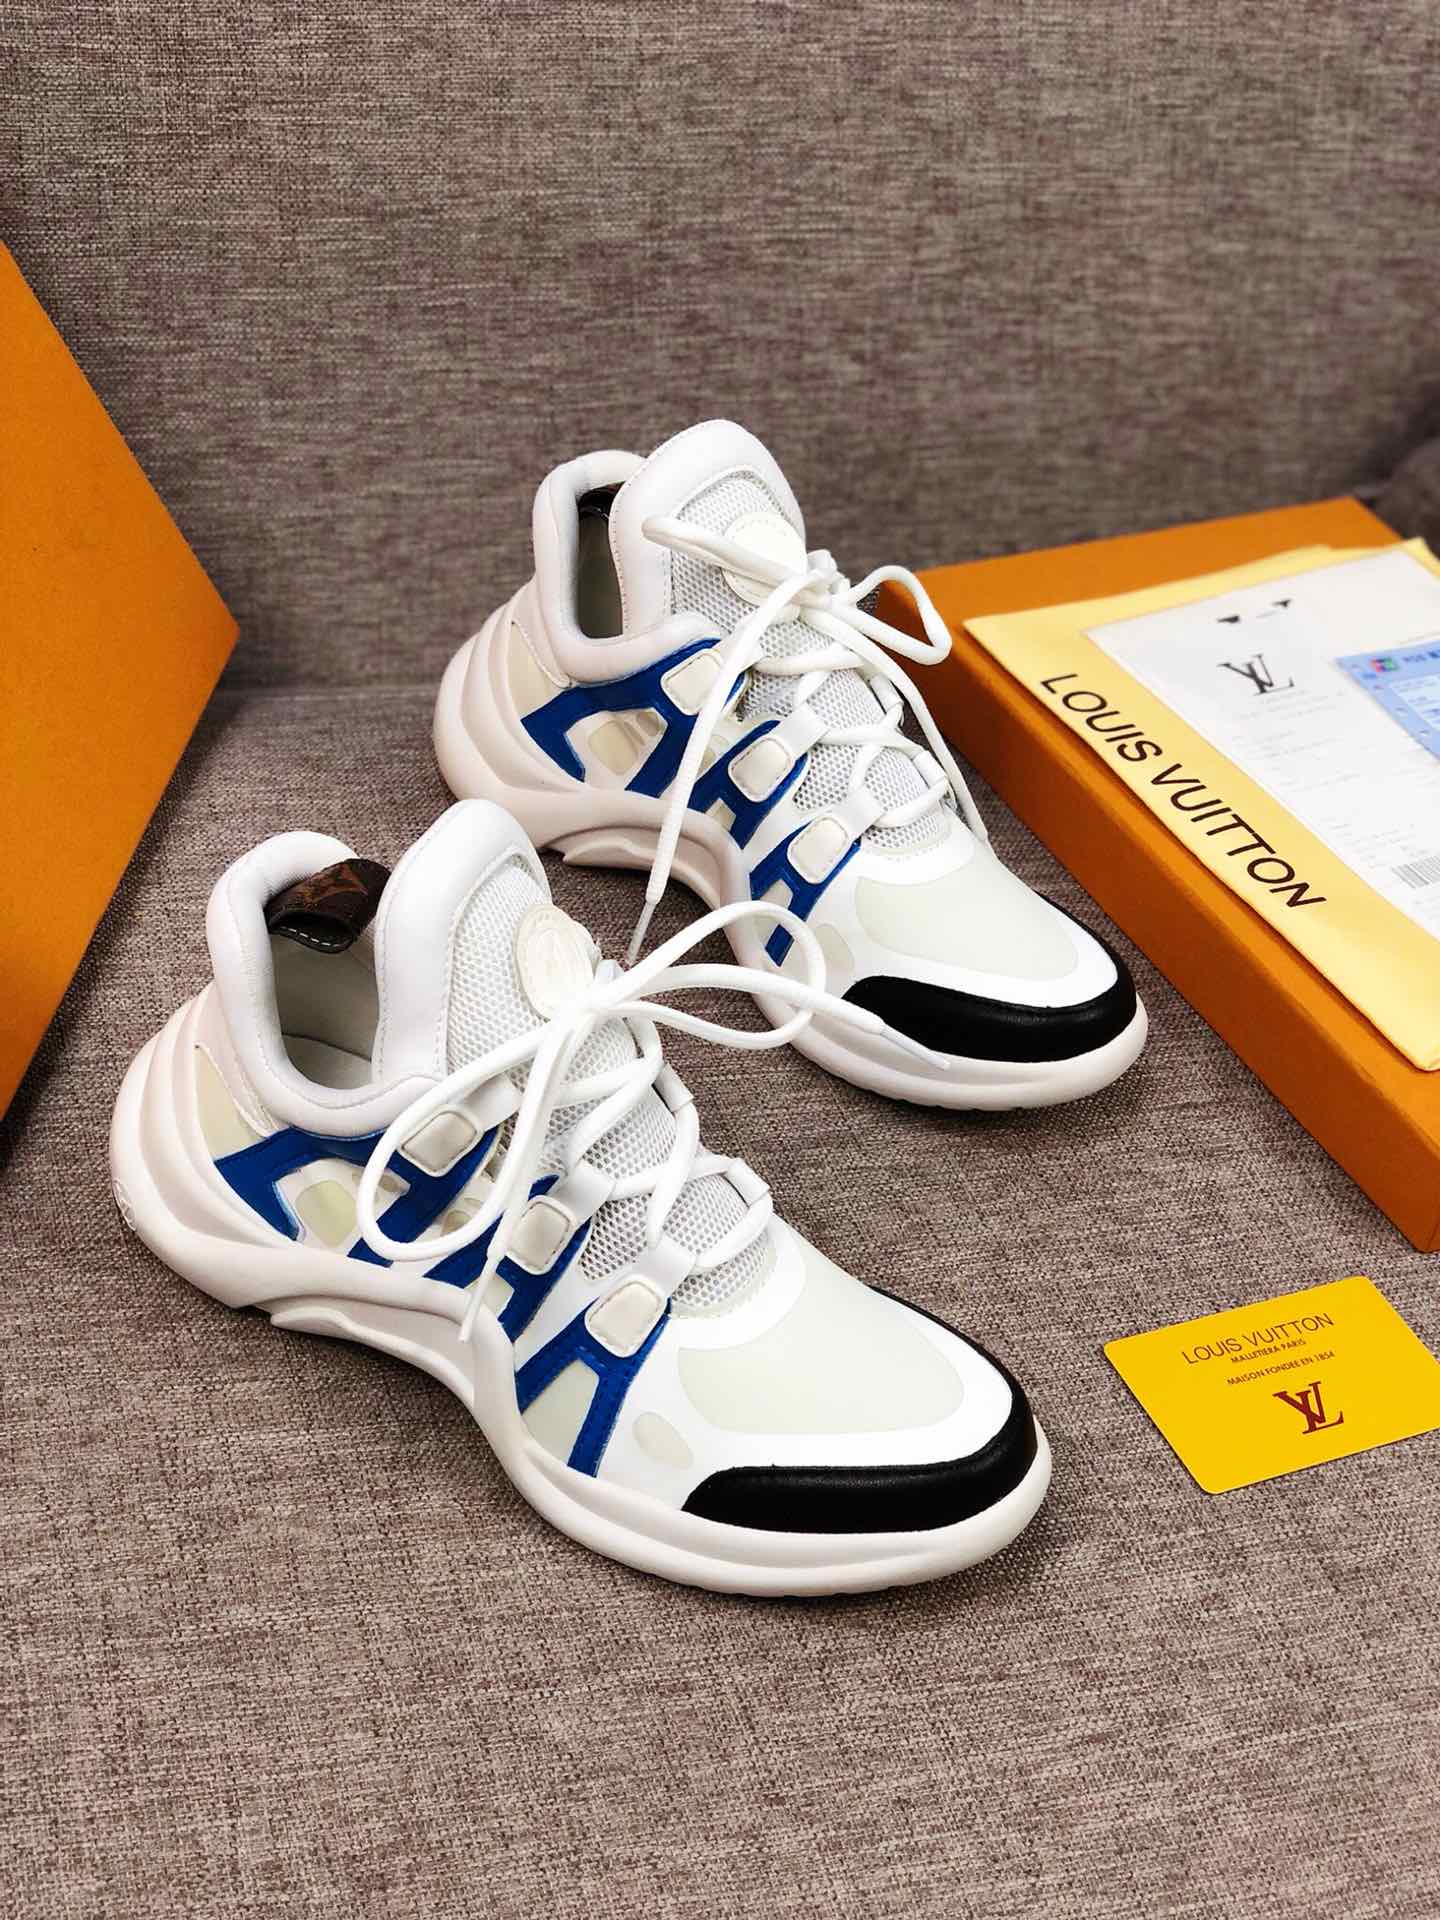 EI -LUV Archlight Blue White Black Sneaker